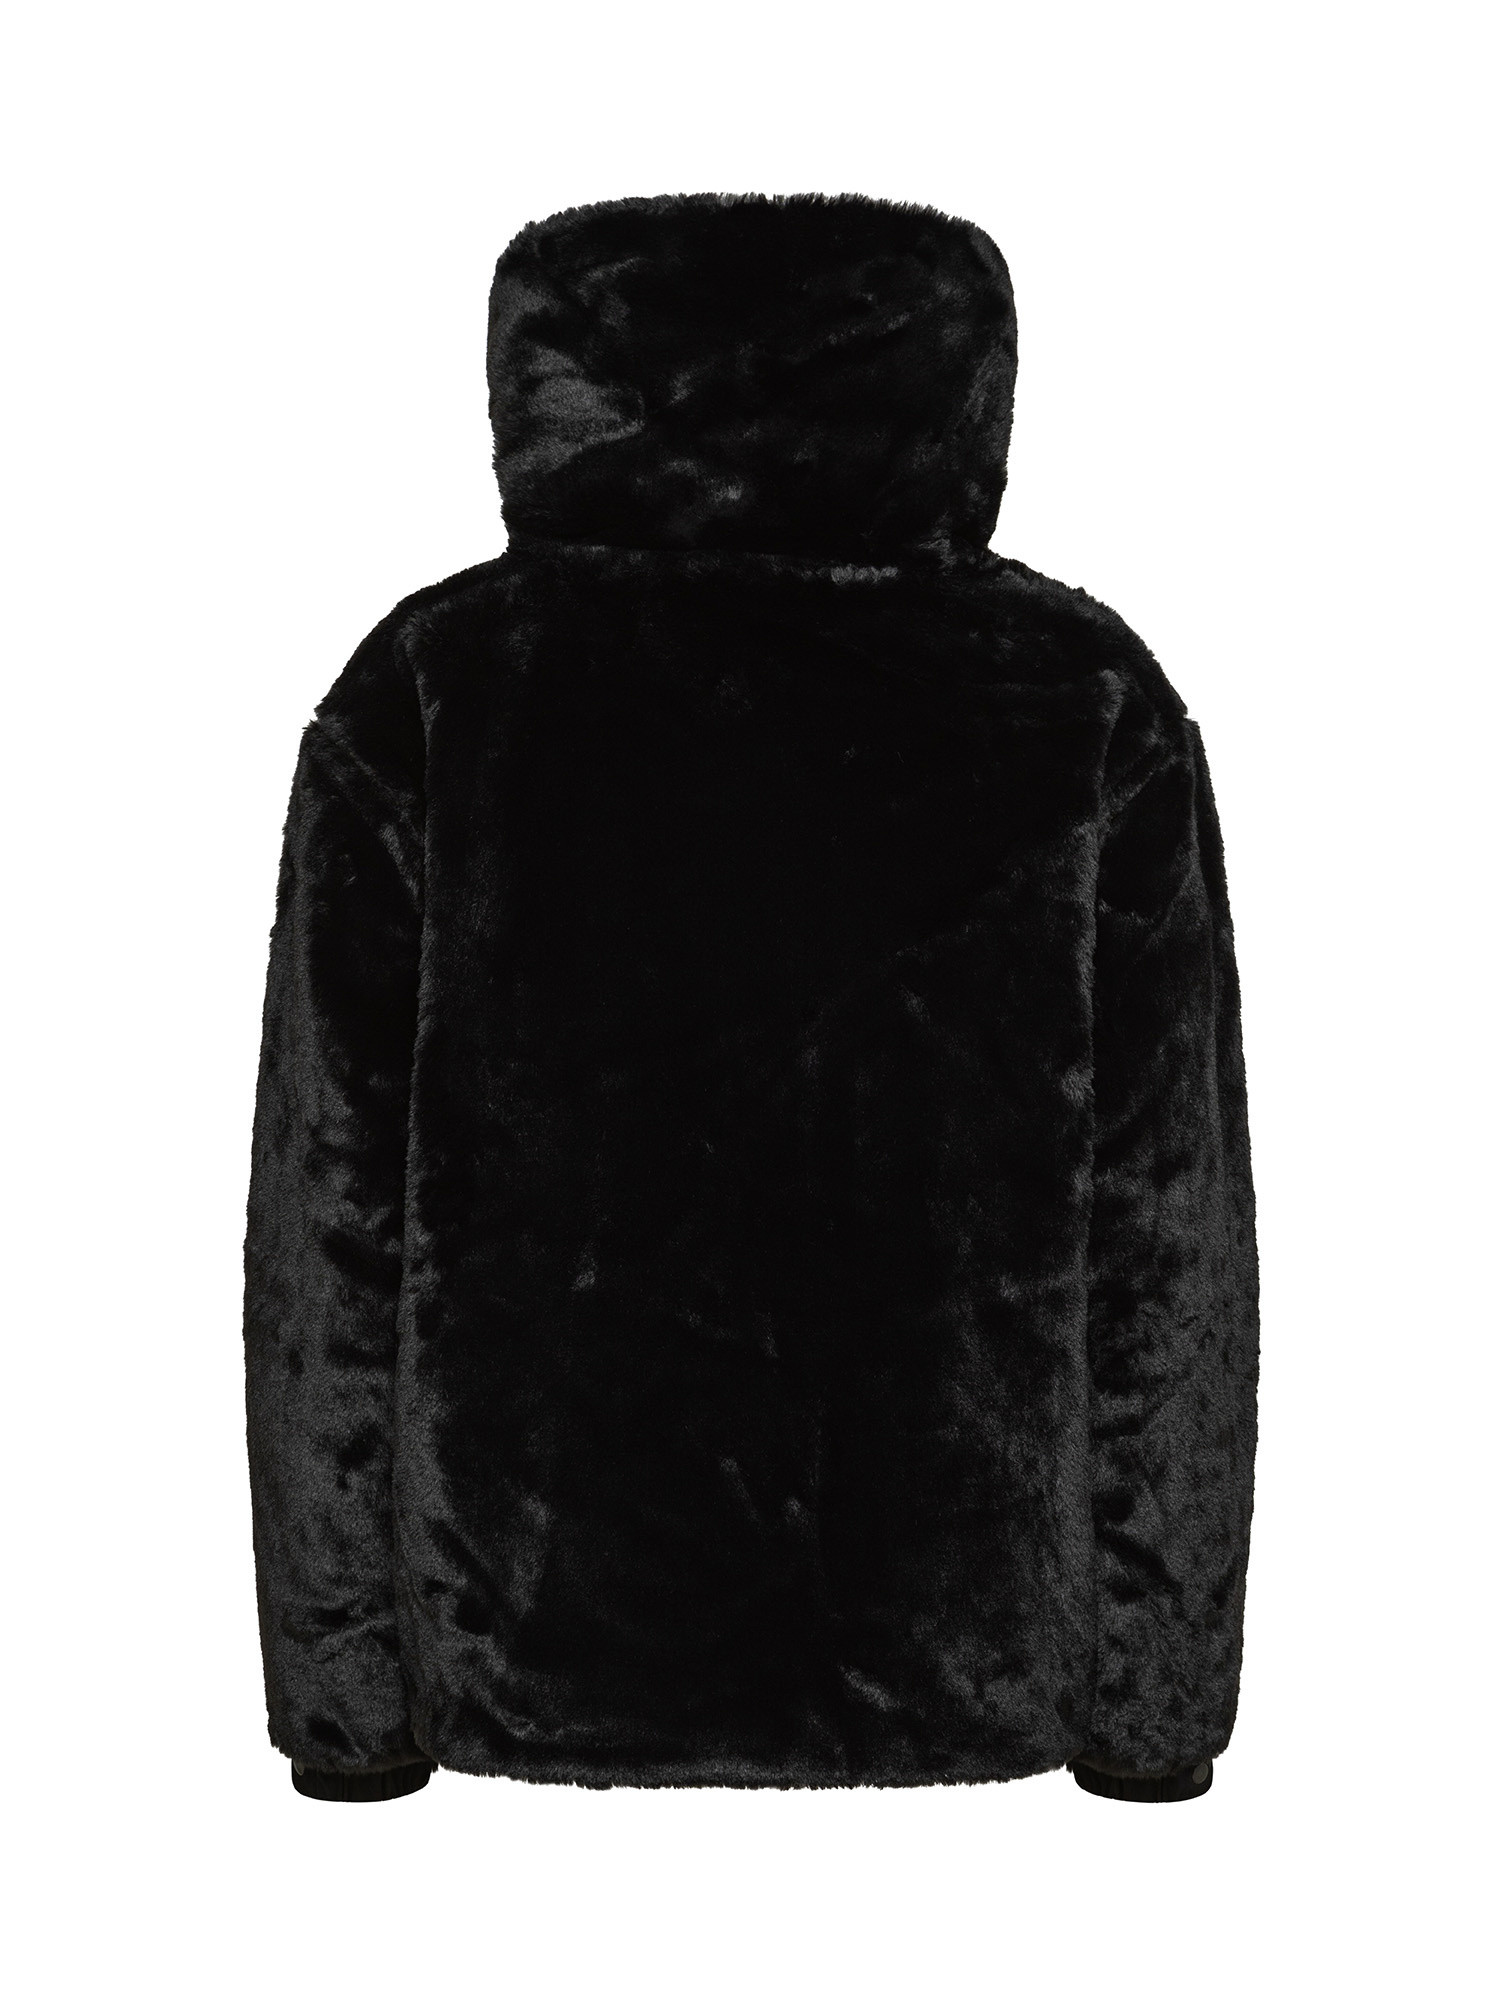 Koan - Reversible jacket, Black, large image number 1